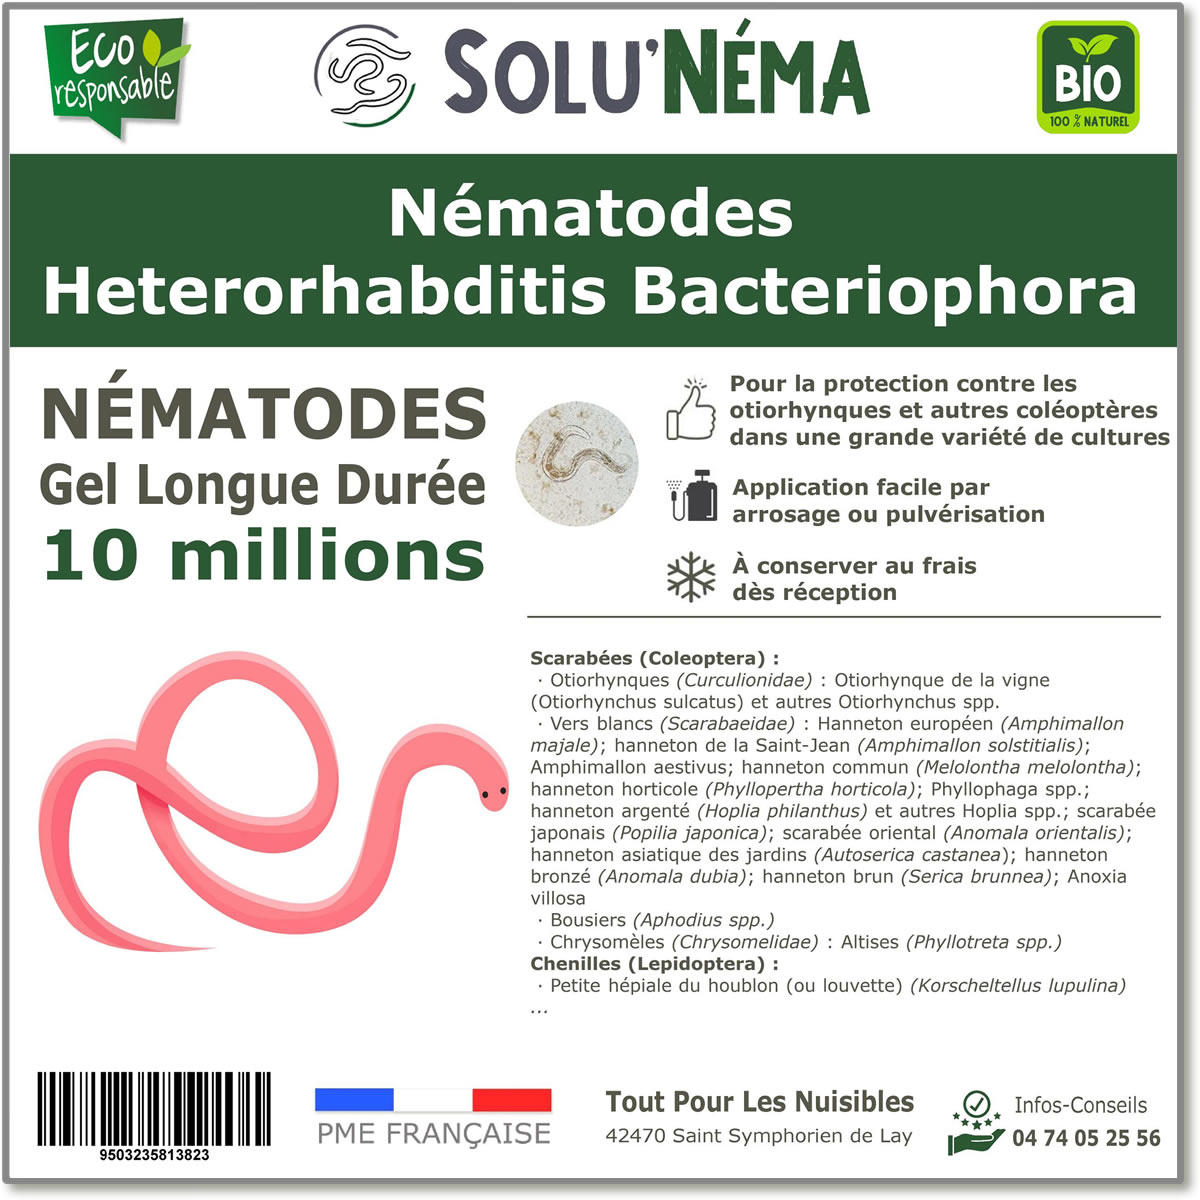 10 milionów nicieni Heterorhabditis Bacteriophora (HB).